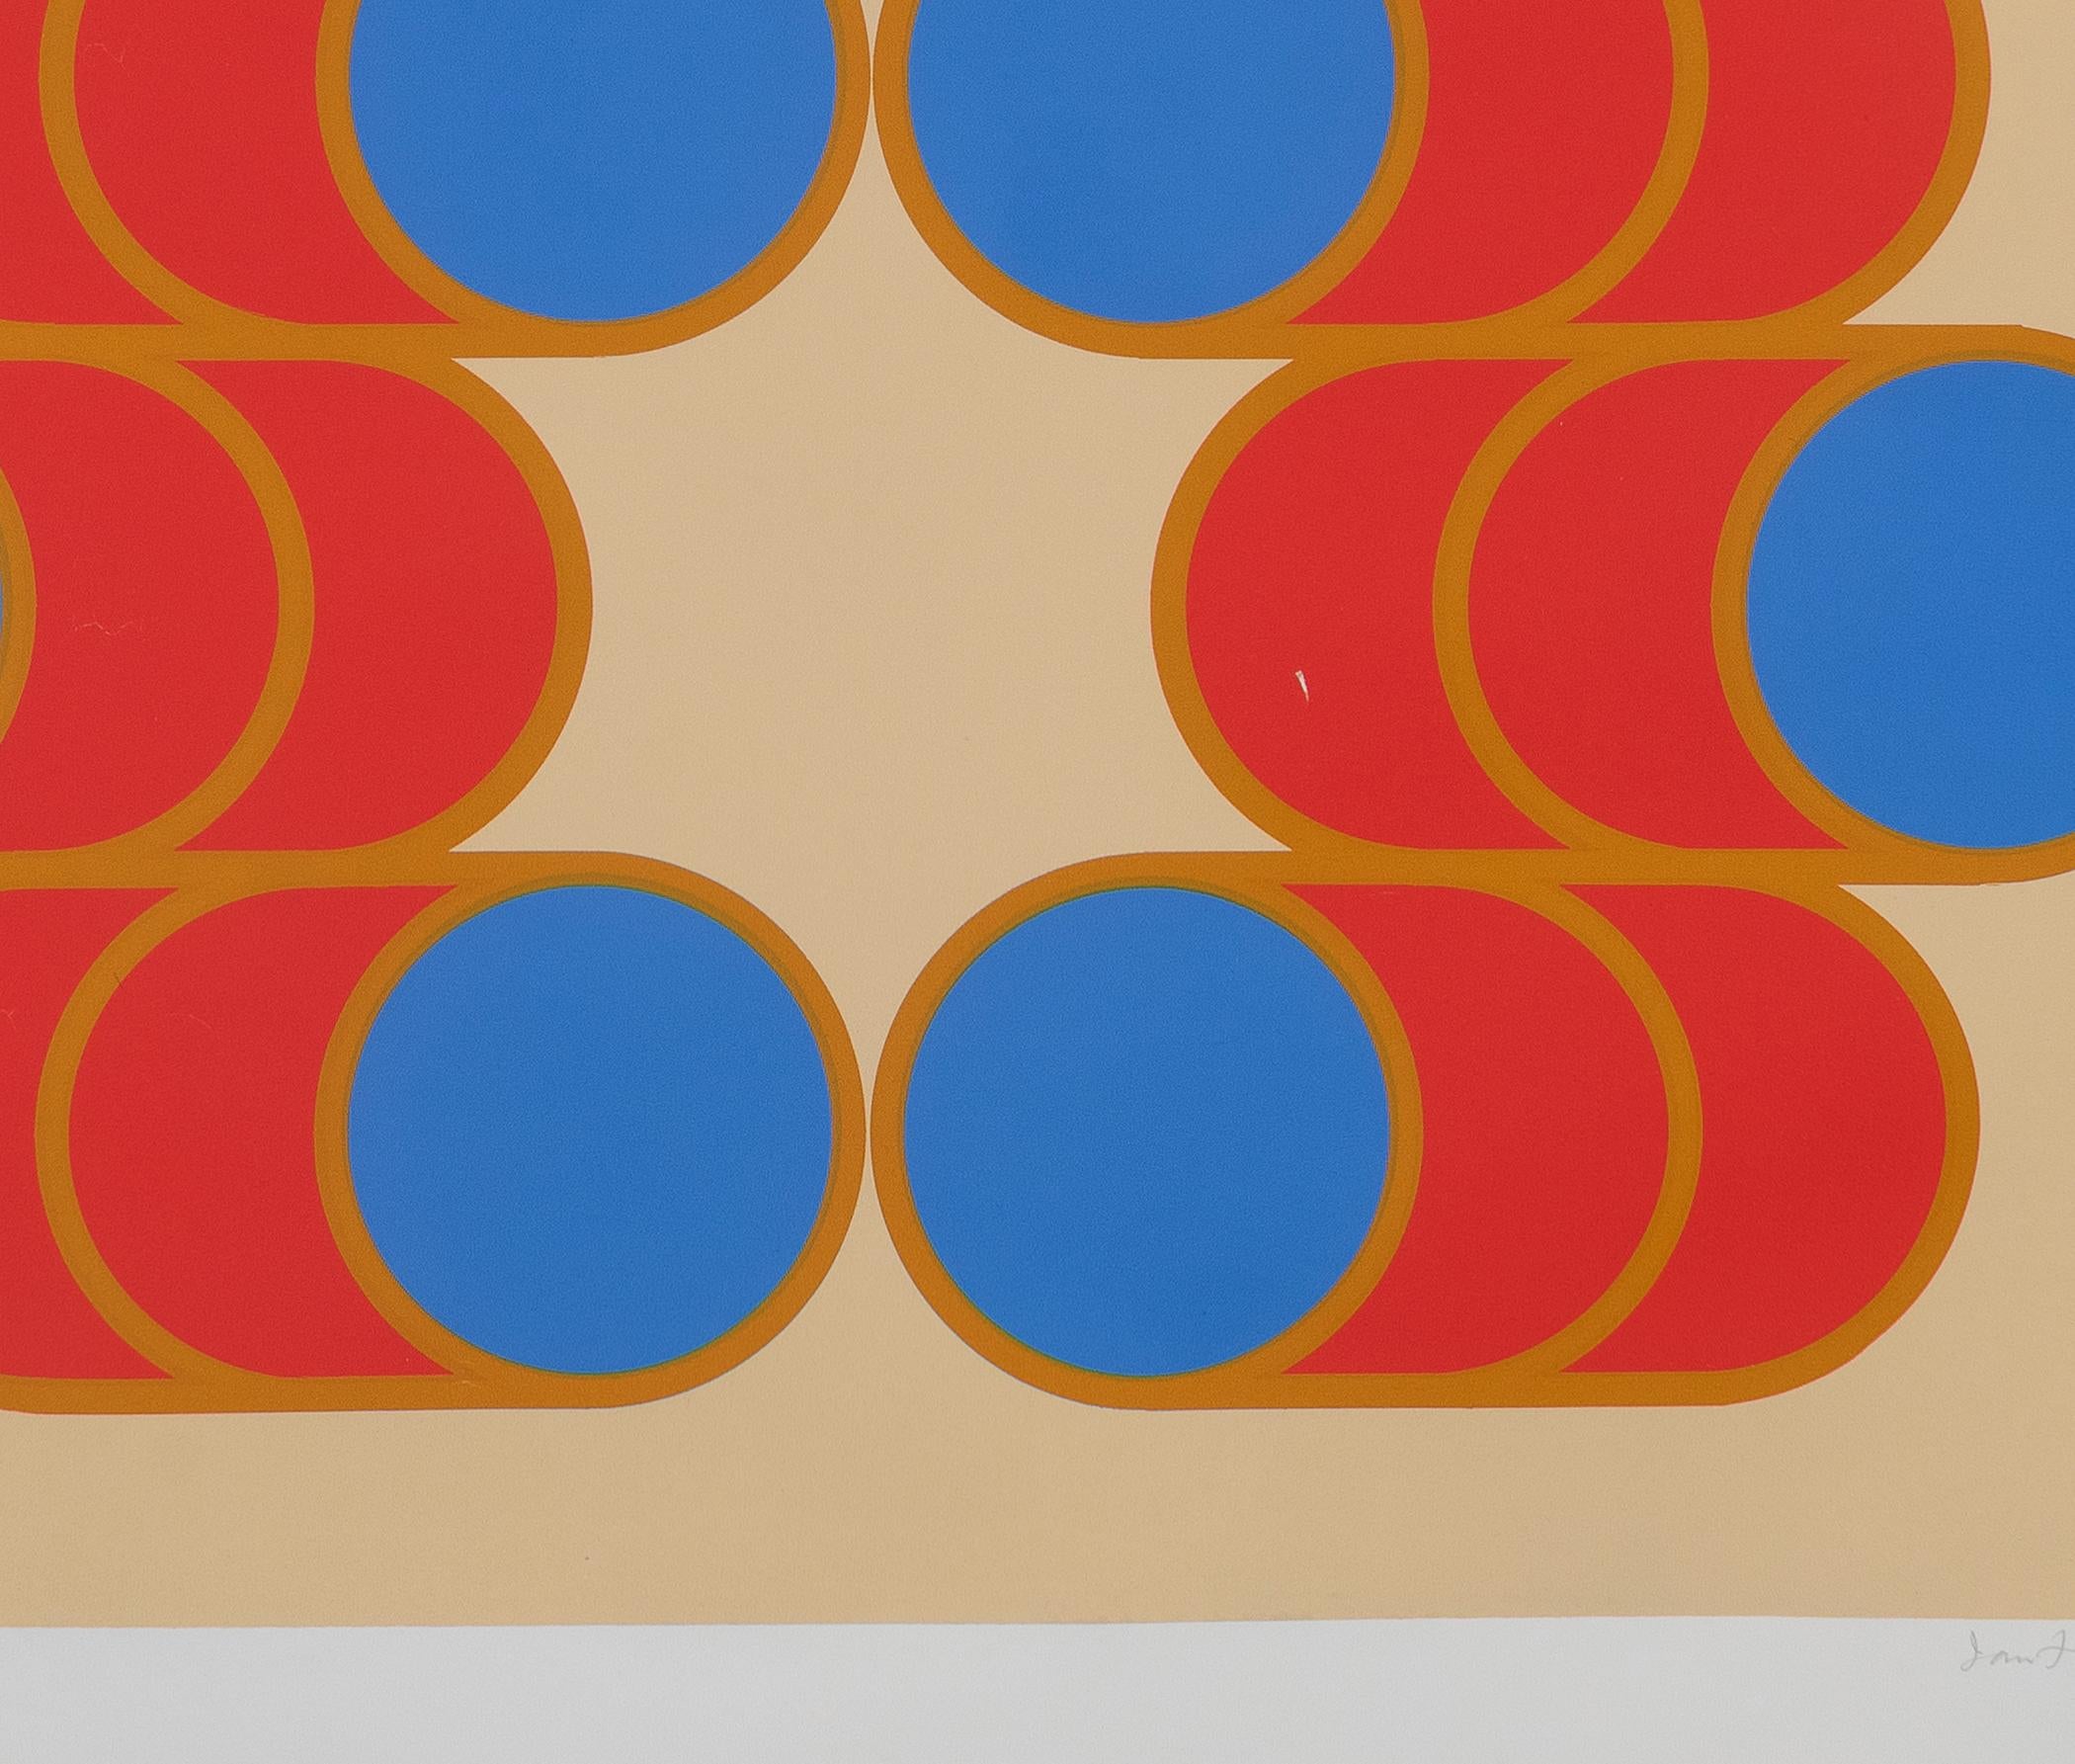 No 14.69 - Abstract Geometric Print by Ian Frazer